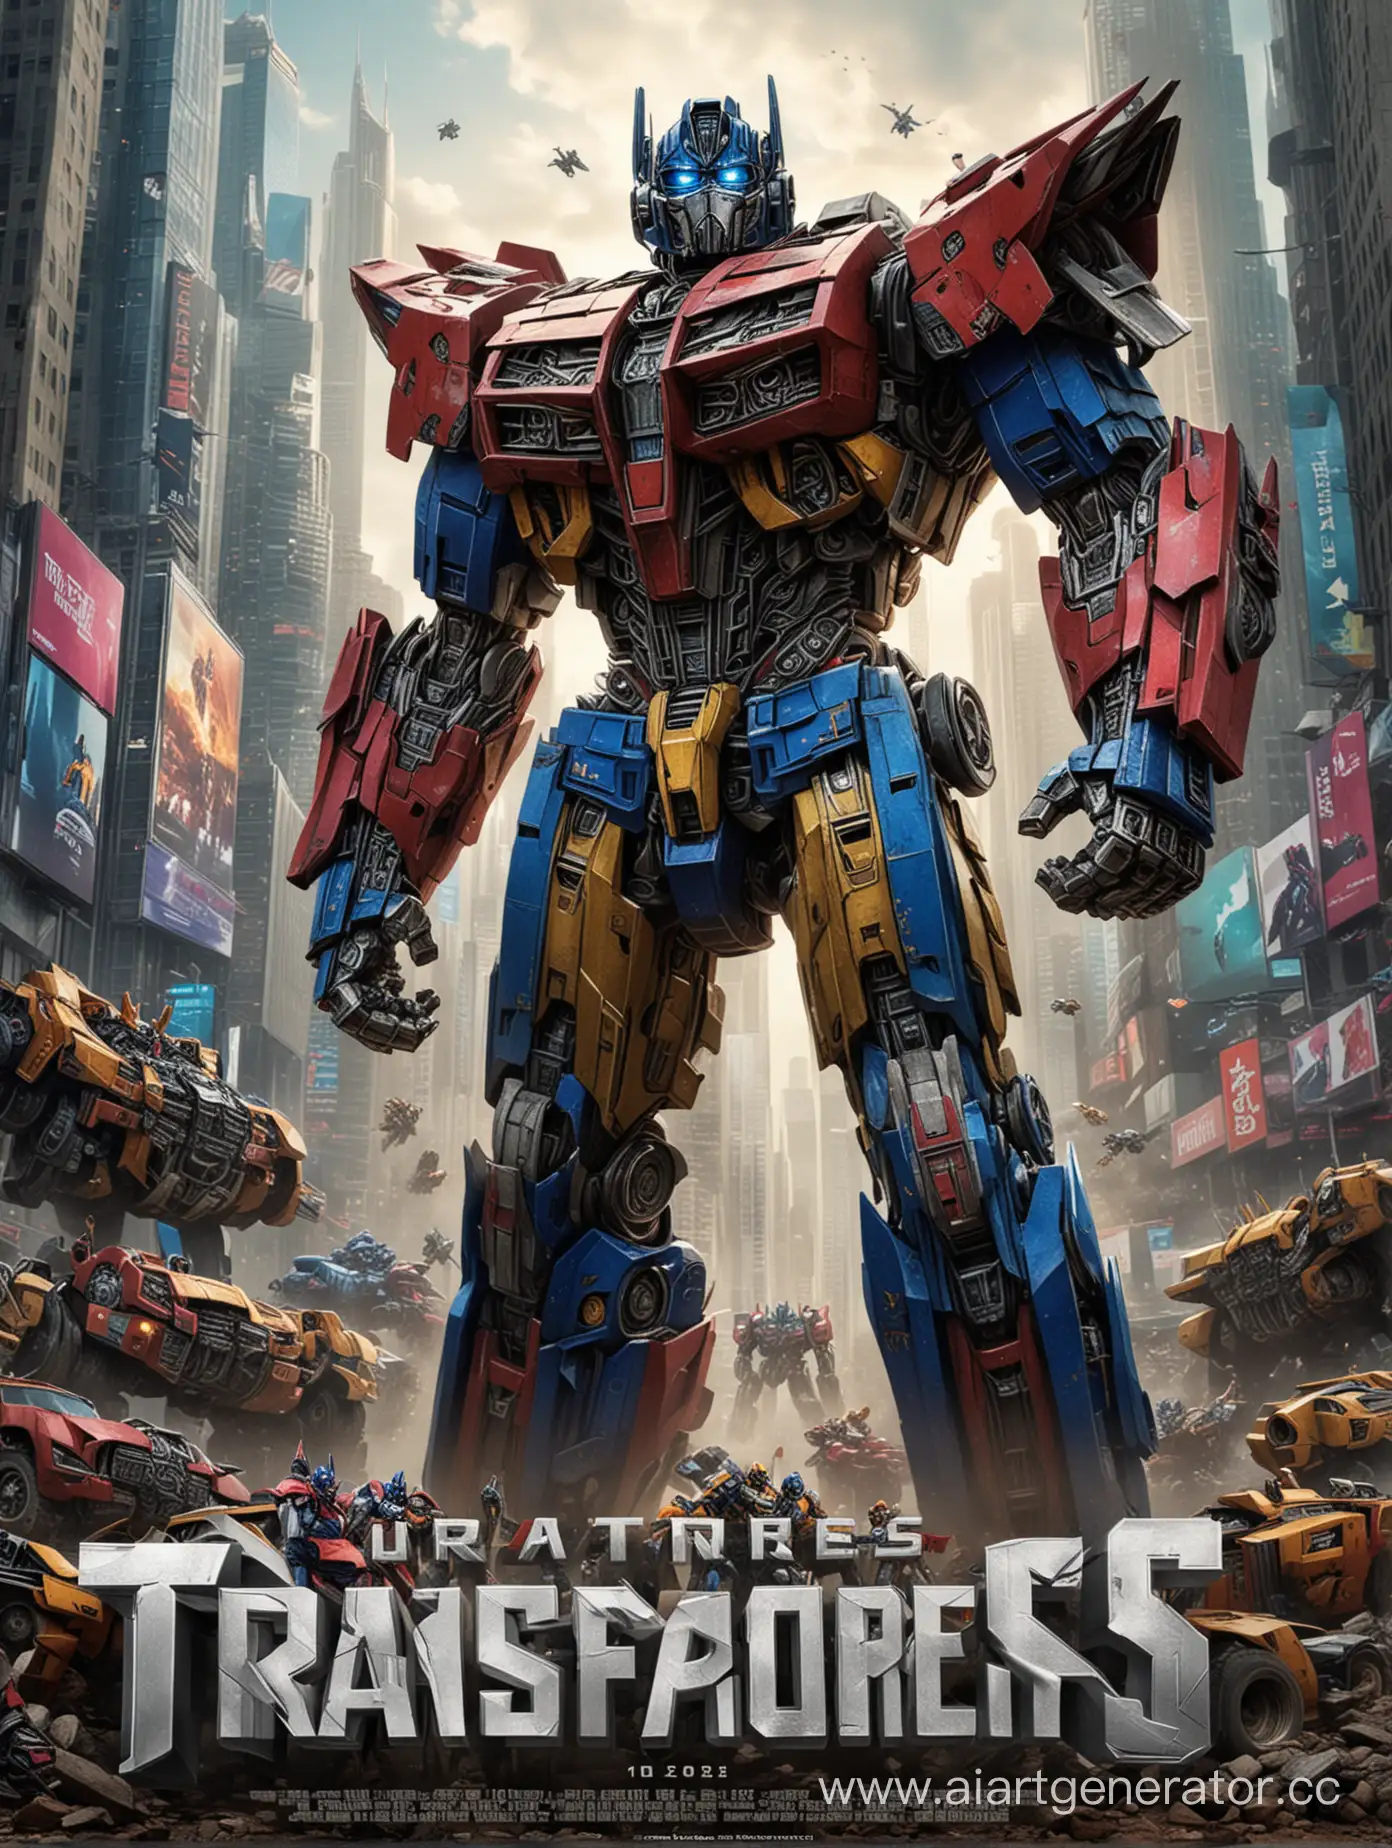 Transformers-Movie-Marathon-Poster-with-Robots-in-Epic-Battle